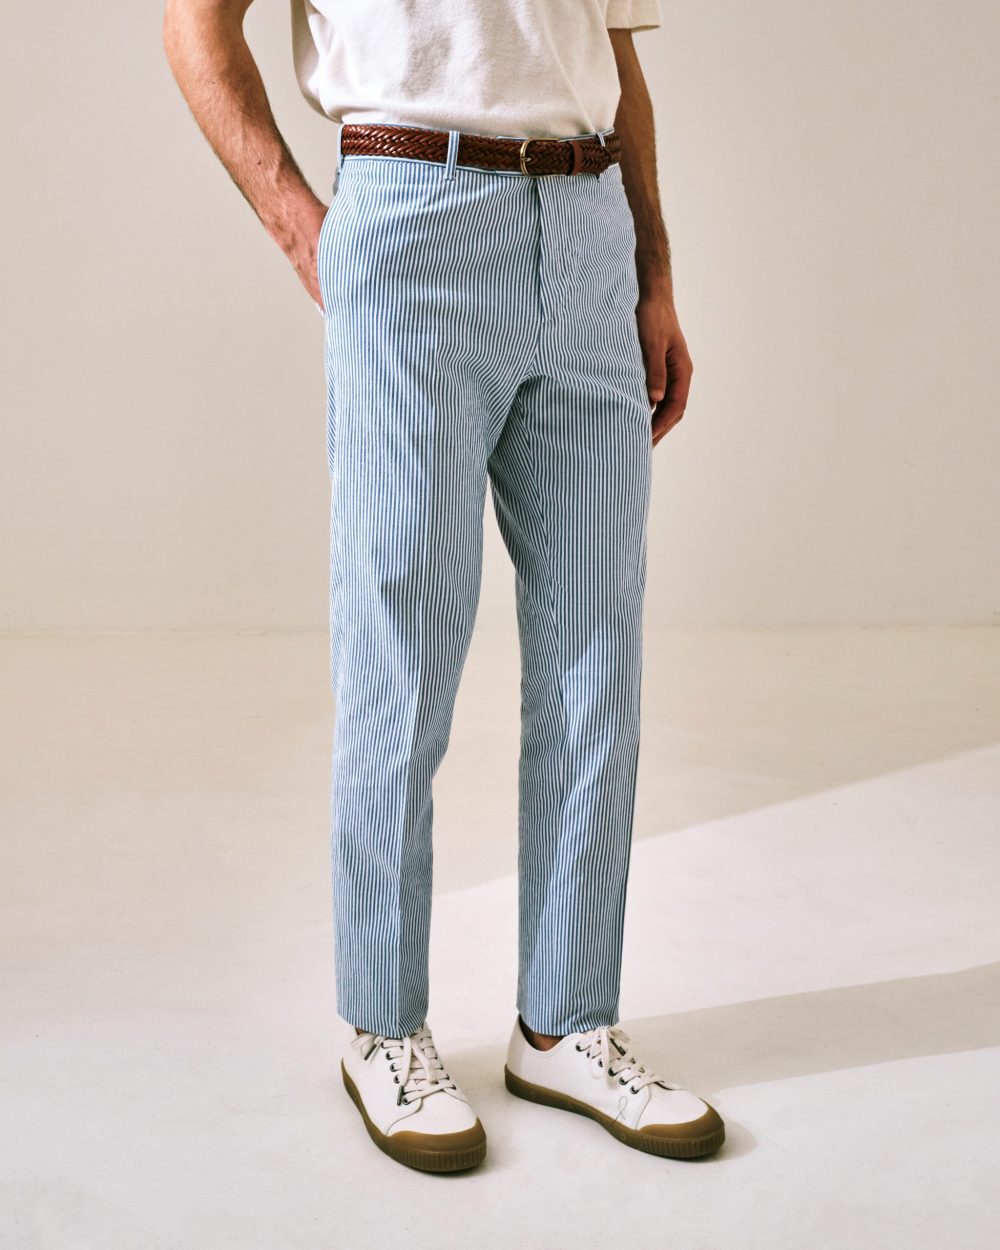 S2 Classic Cut Trousers / Seersucker